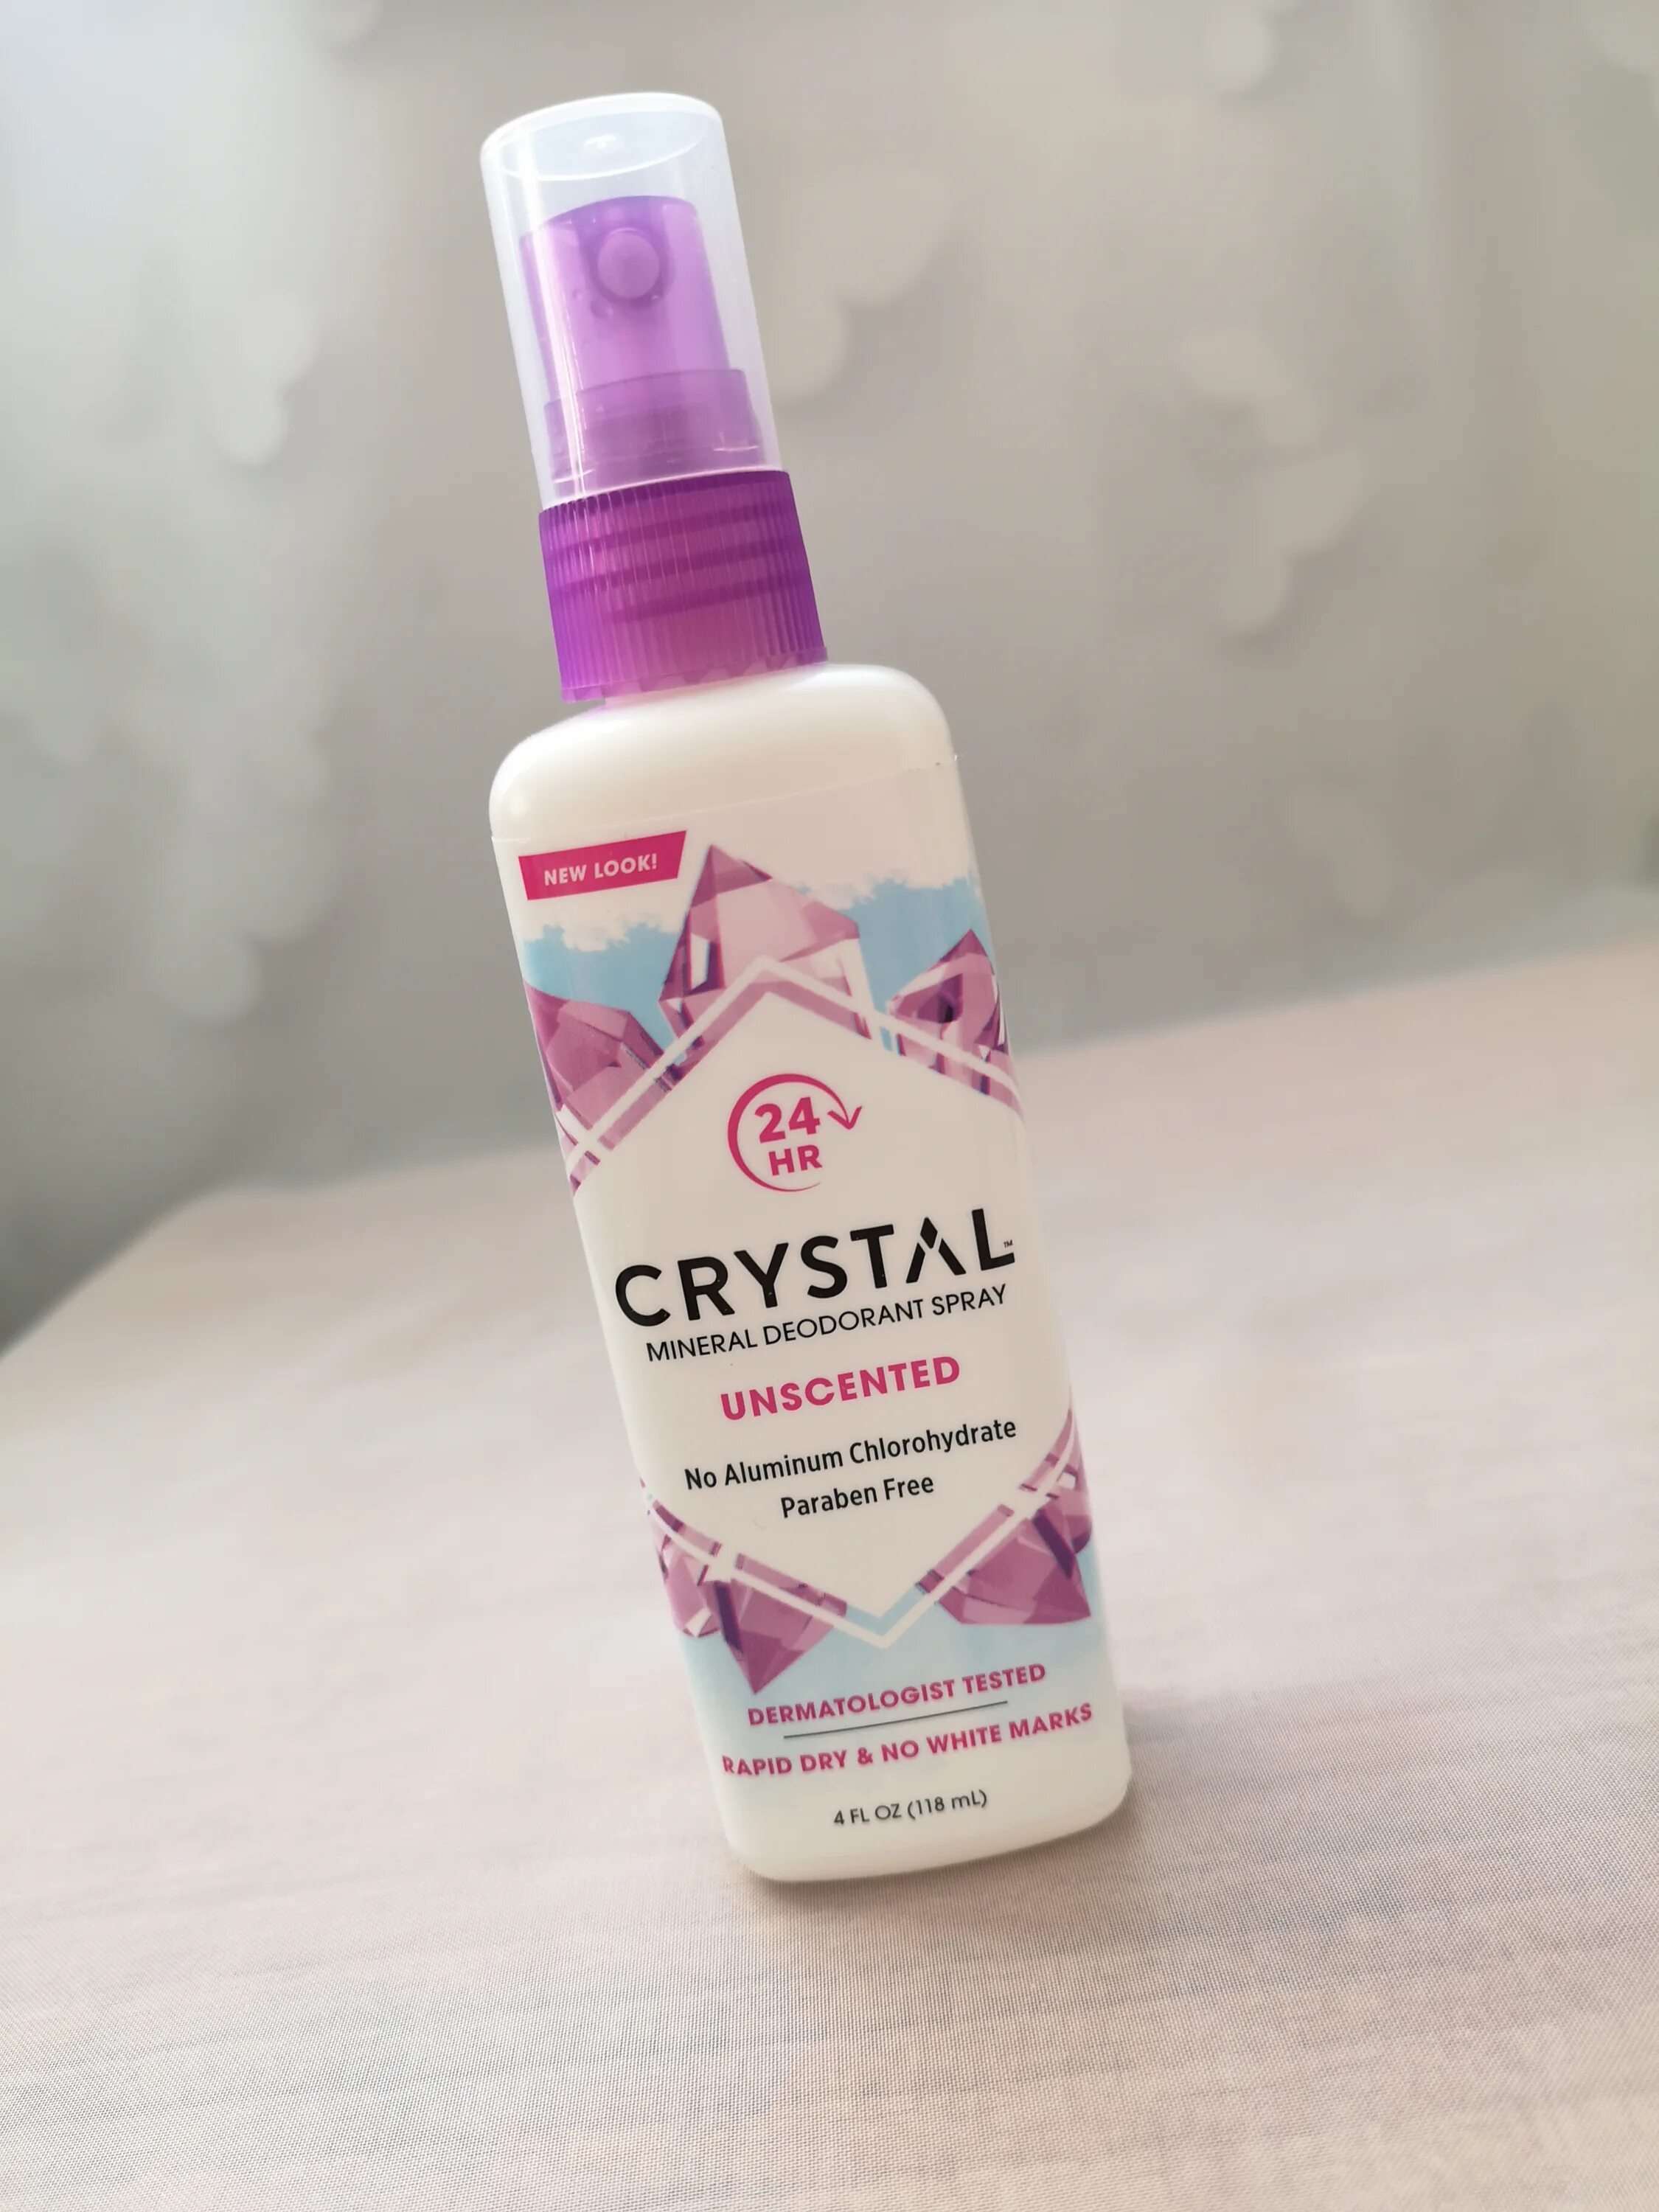 Кристалл без запаха. Дезодорант-спрей для тела / Crystal body Spray 118 мл. Crystal body Deodorant, минеральный дезодорант спрей. Дезодорант Crystal без солей алюминия. Минеральный дезодорант Кристалл спрей.